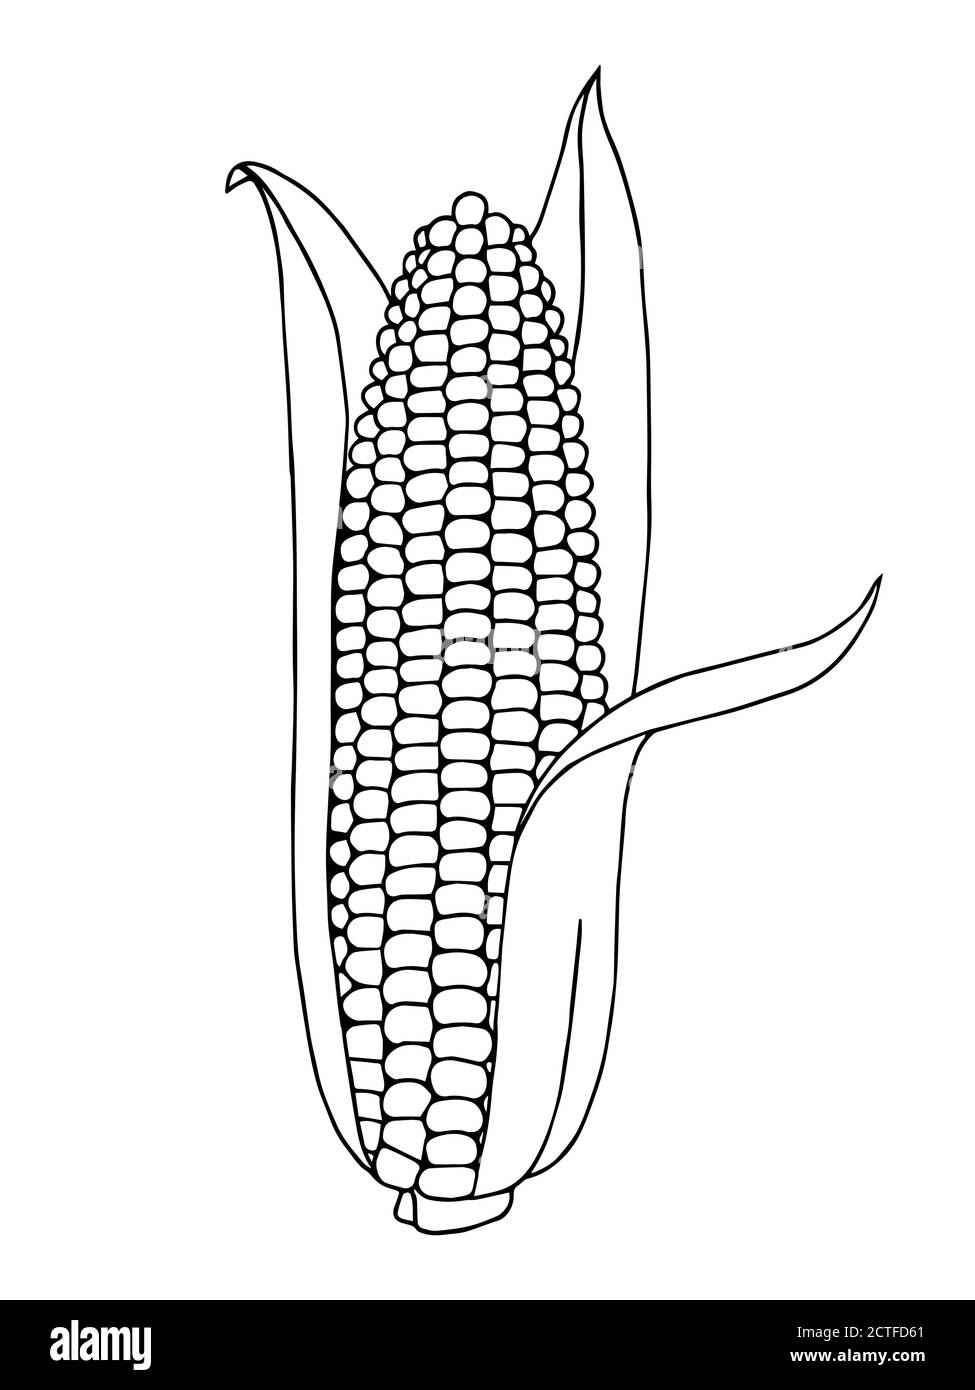 Black white cartoon illustration corn Black and White Stock Photos & Images  - Alamy